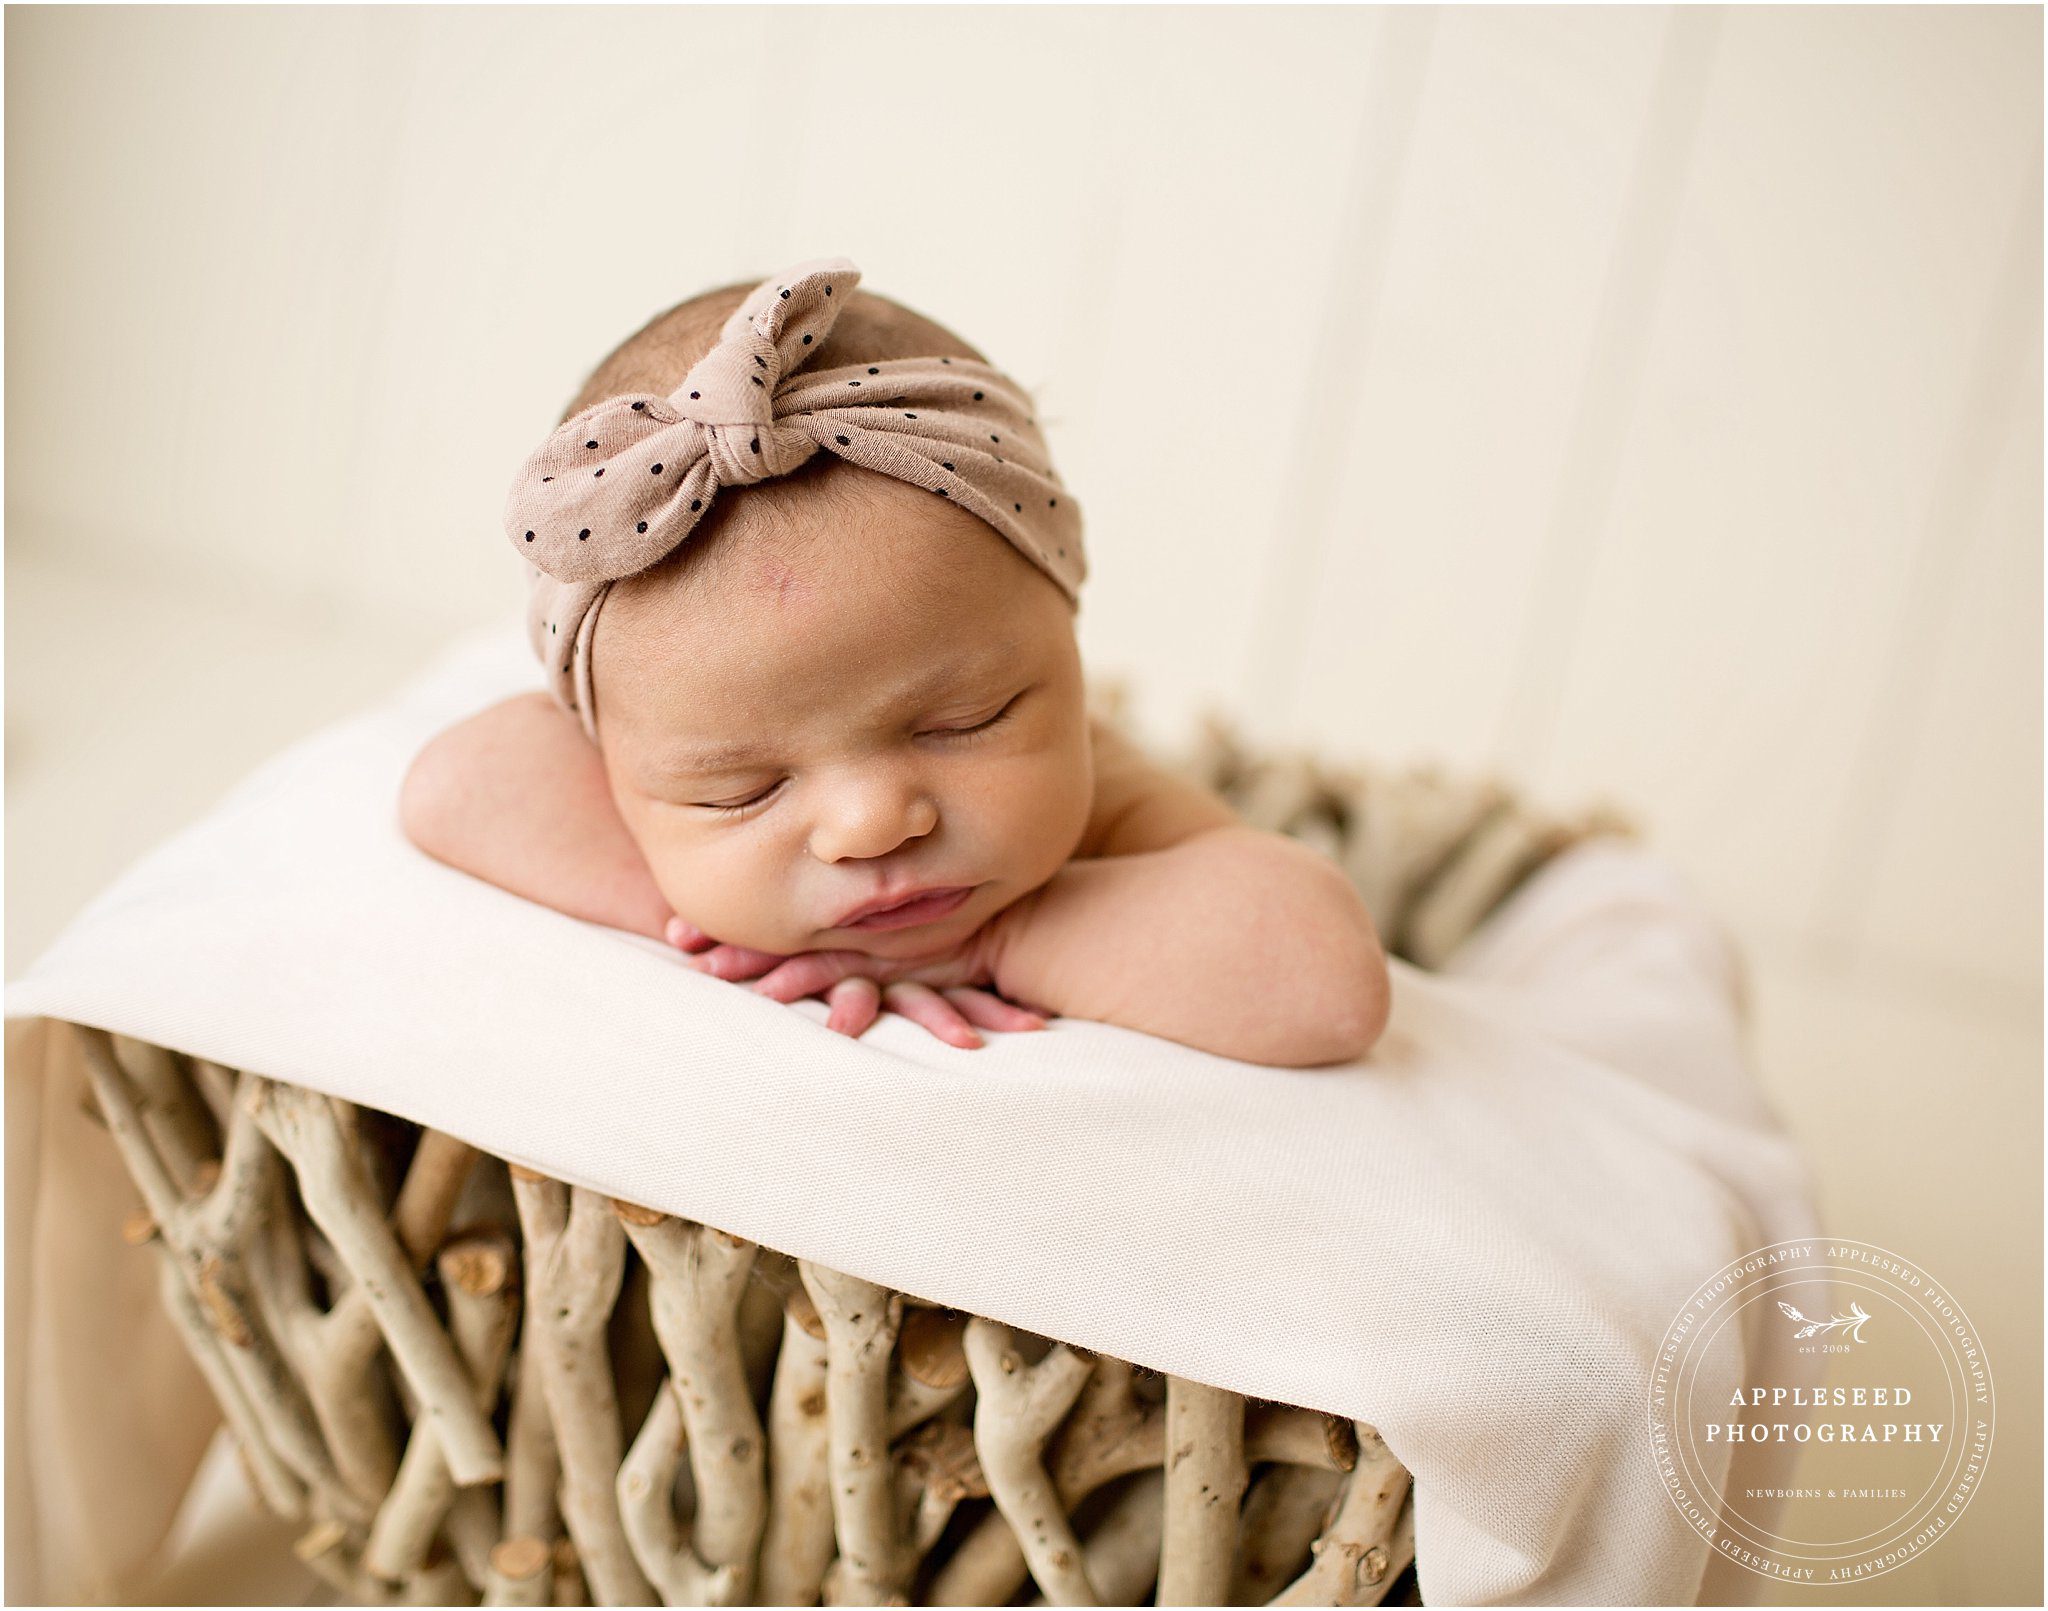 Amelia | Atlanta Newborn Photographer | Appleseed Photography